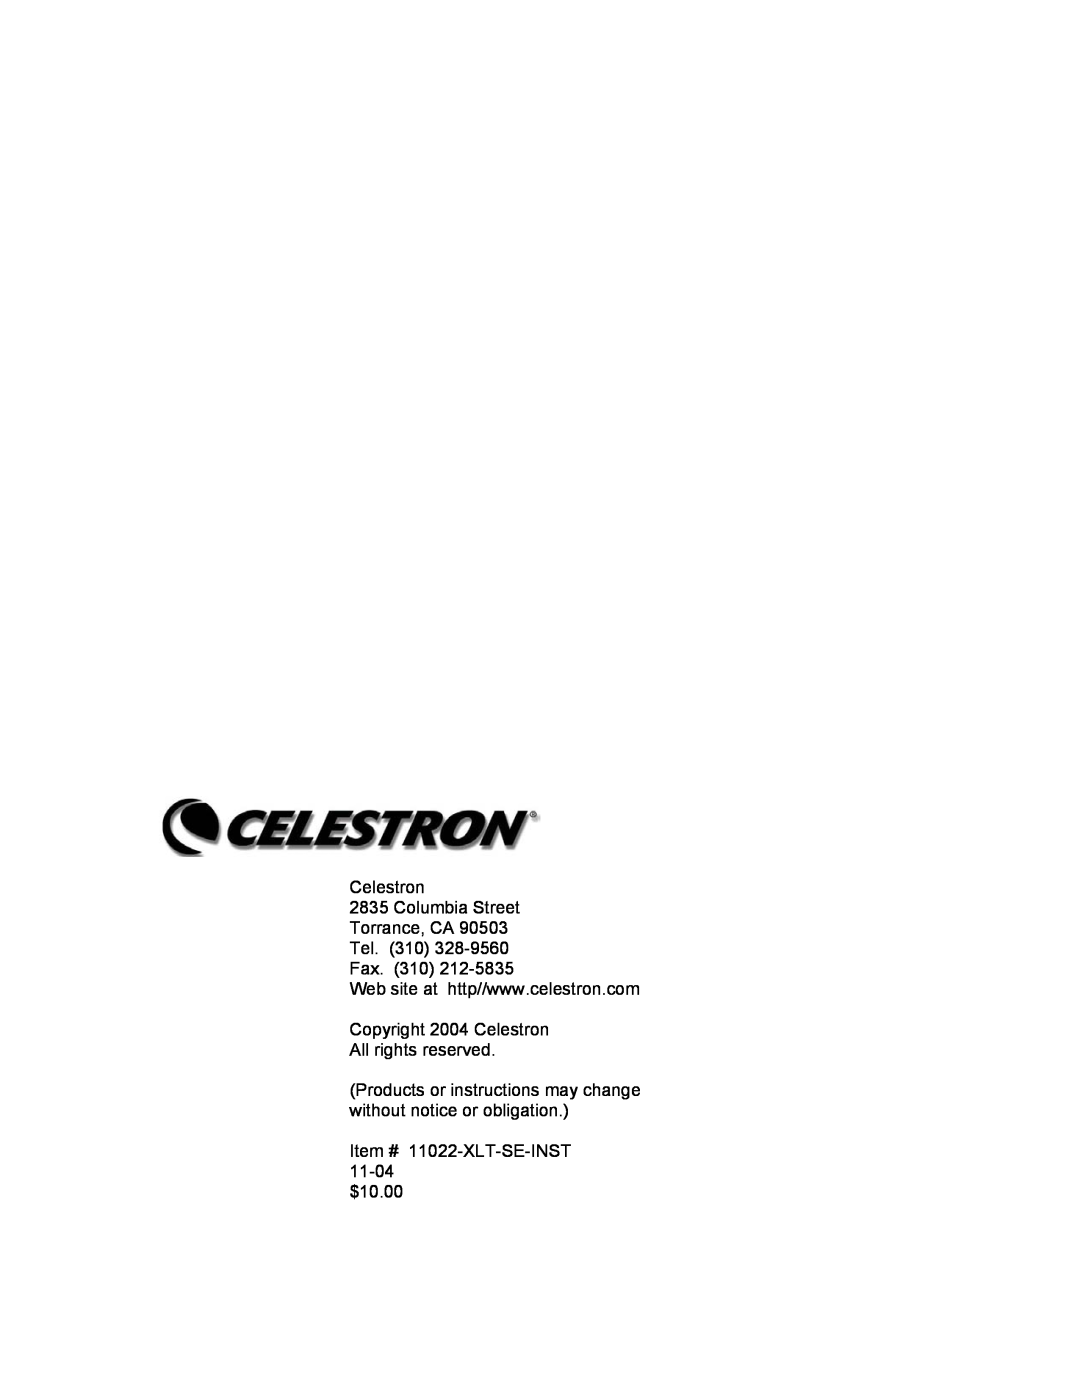 Celestron 8i Celestron 2835 Columbia Street Torrance, CA Tel. 310 Fax. 310, Copyright 2004 Celestron All rights reserved 